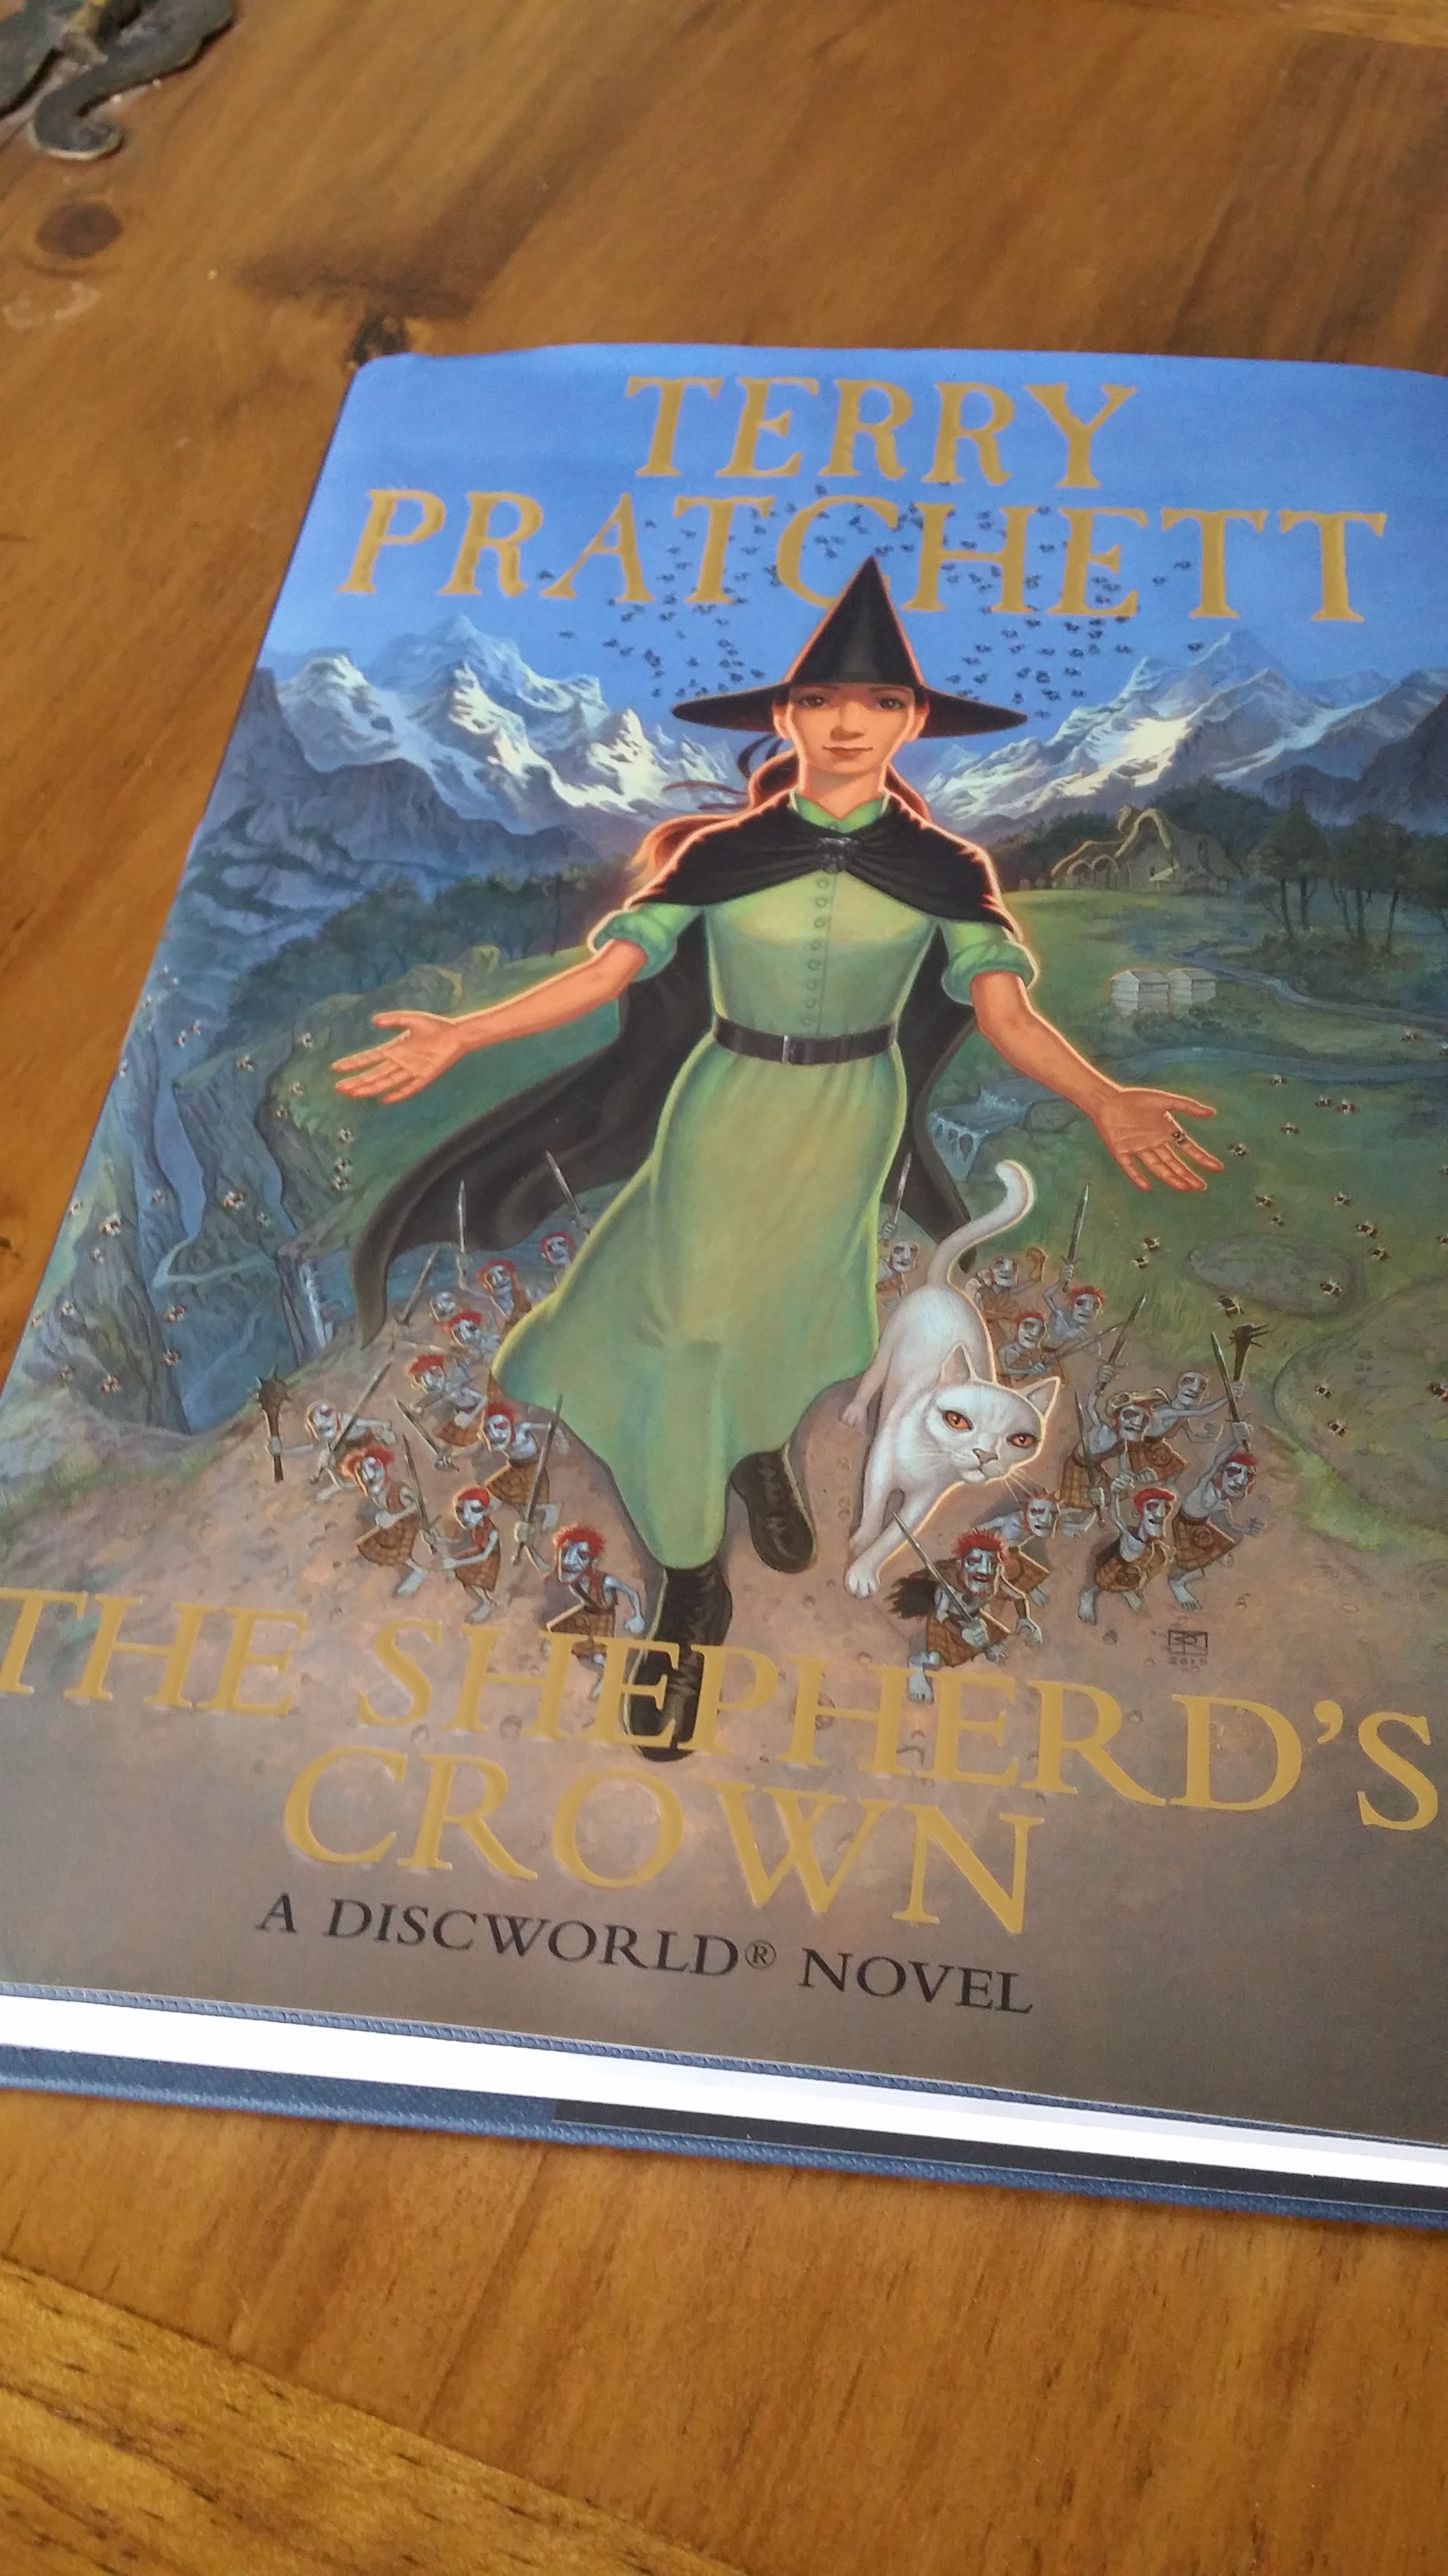 The Sheperd's Crown by Terry Pratchett